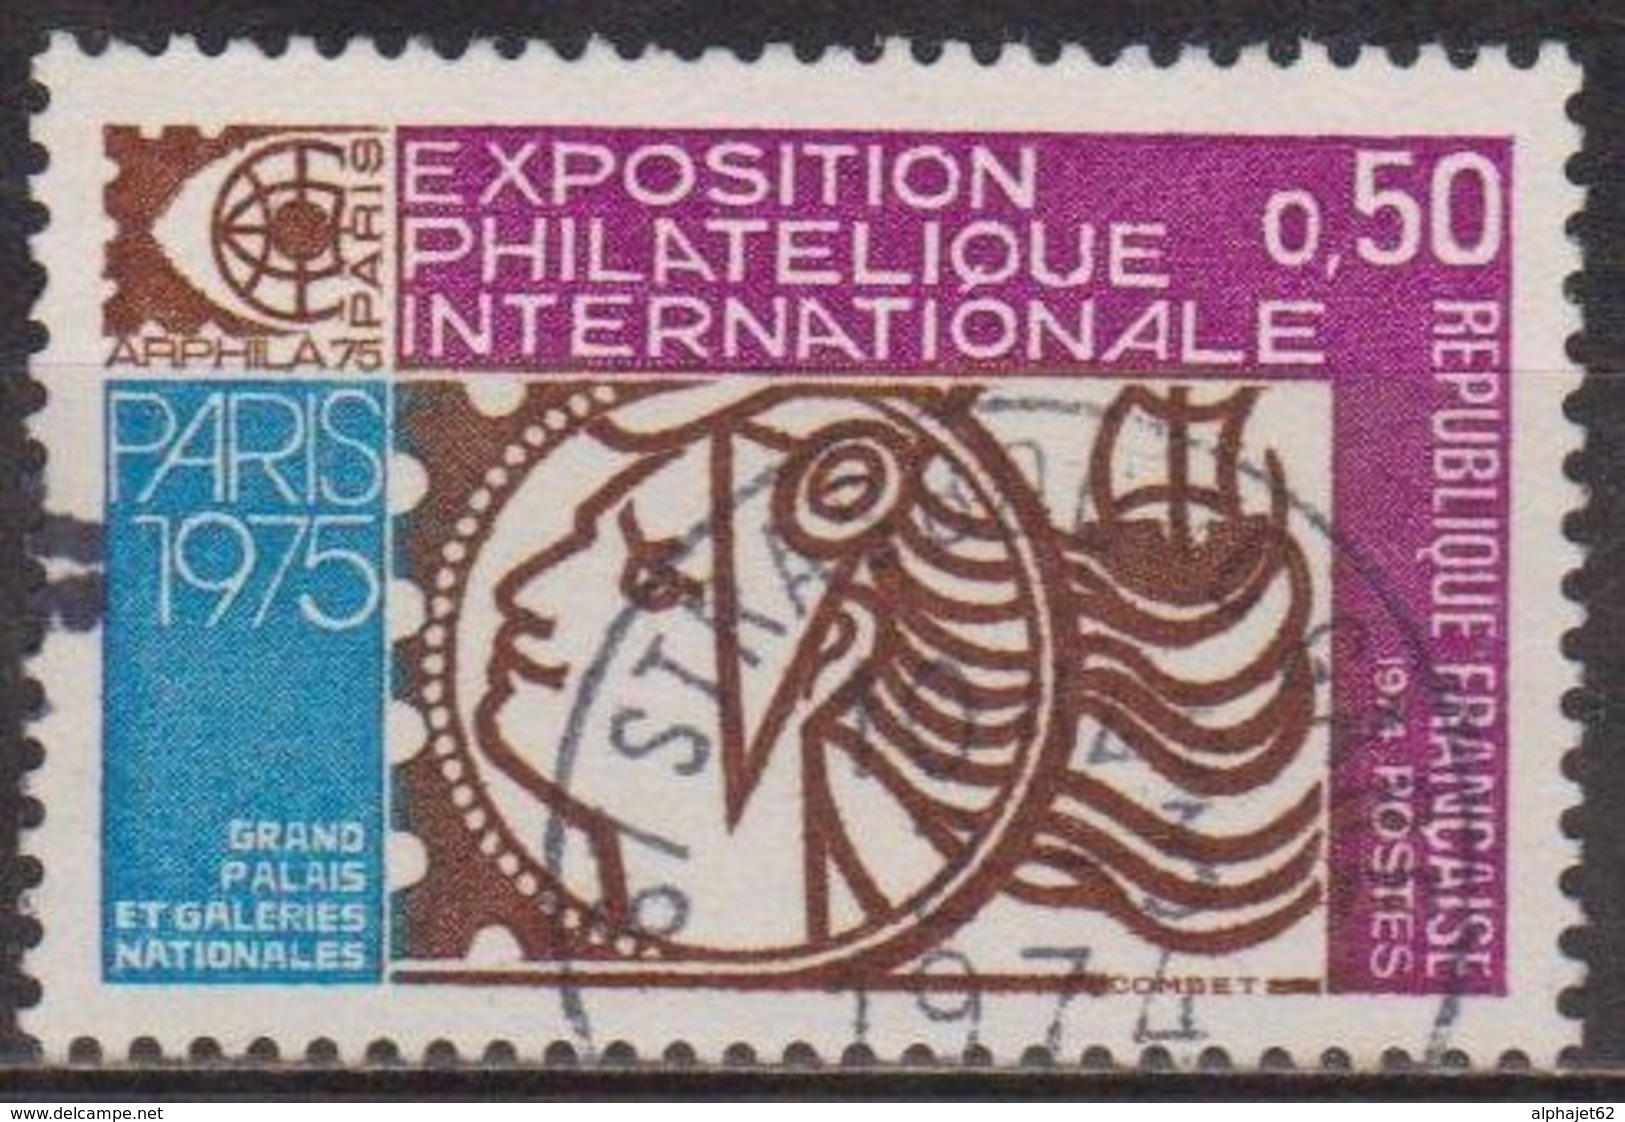 Arphila 75 Paris - FRANCE - Exposition Philatélique Internationale - N° 1783 - 1974 - Used Stamps